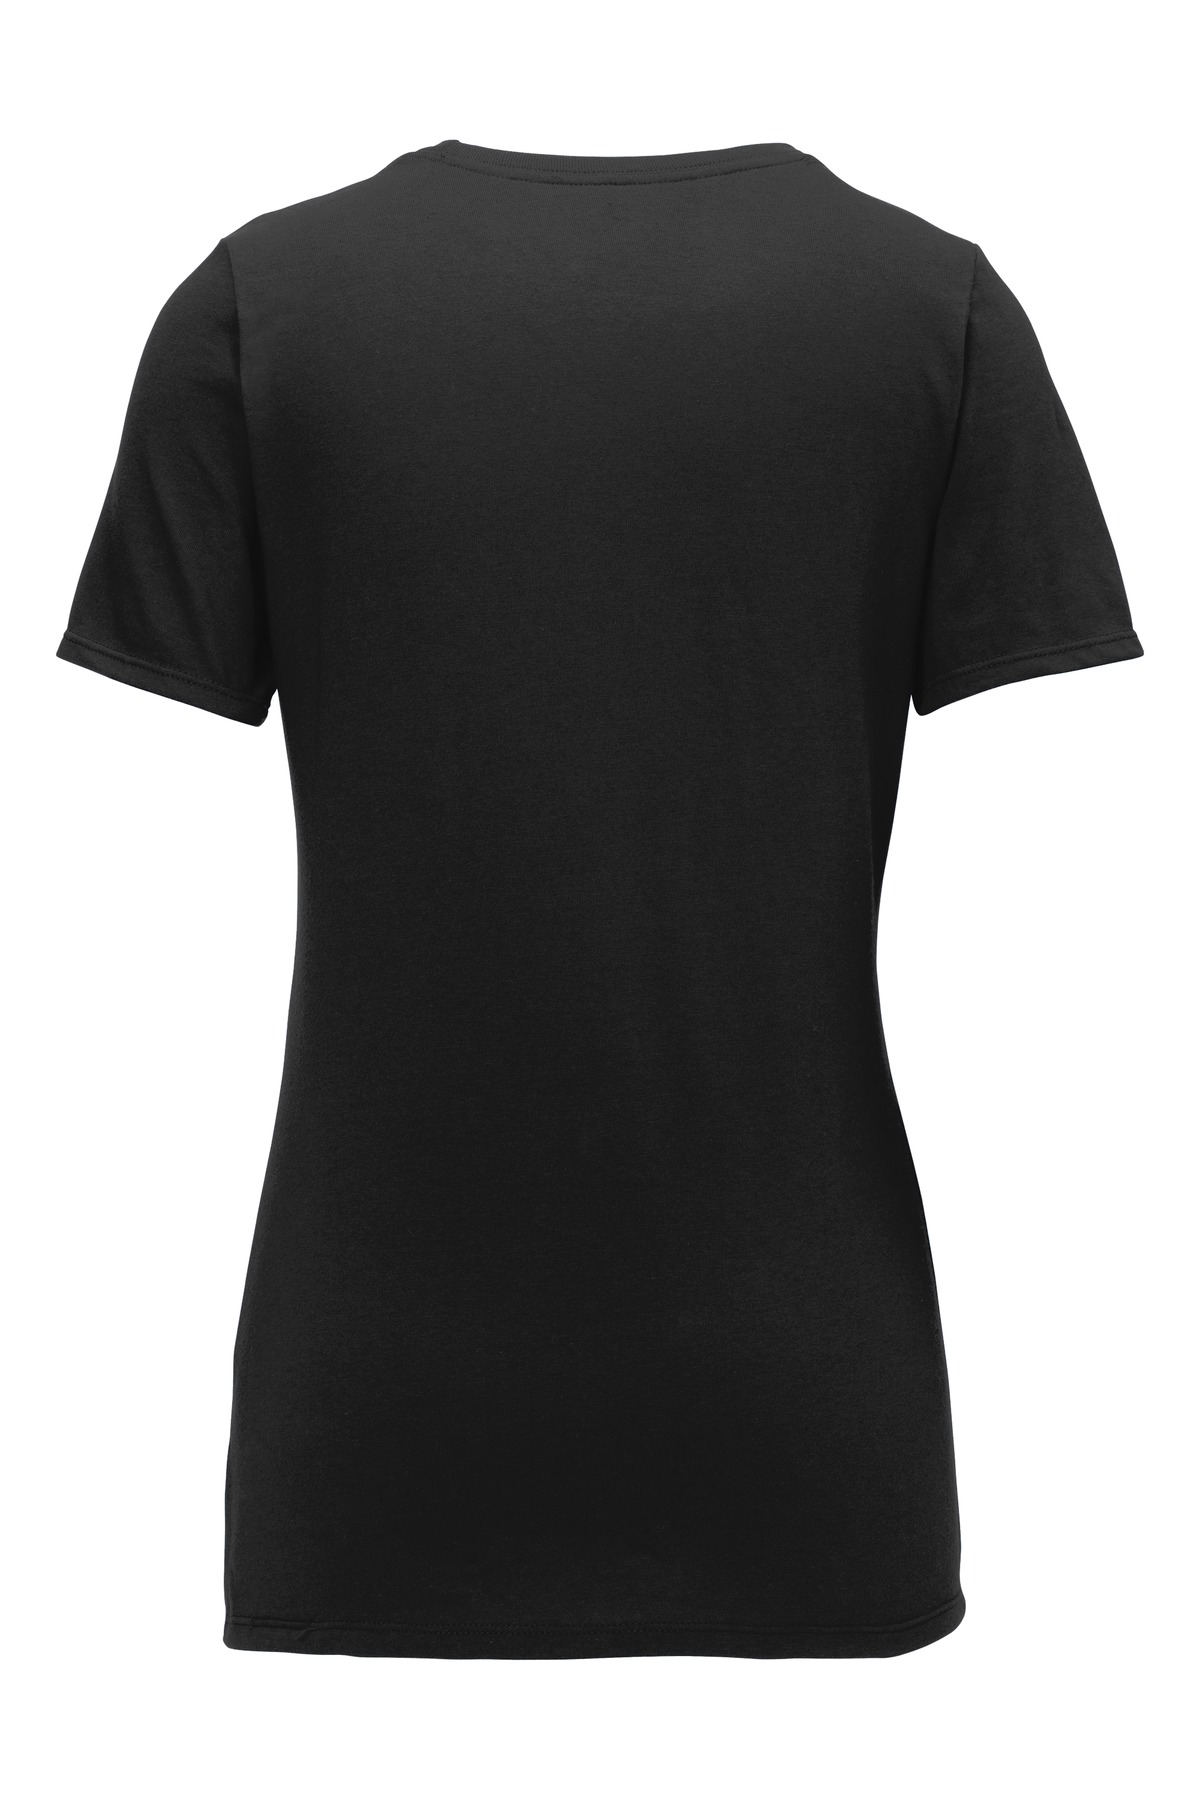 Nike Ladies Dri-FIT Cotton/Poly Scoop Neck Tee. NKBQ5234 - Custom Shirt ...